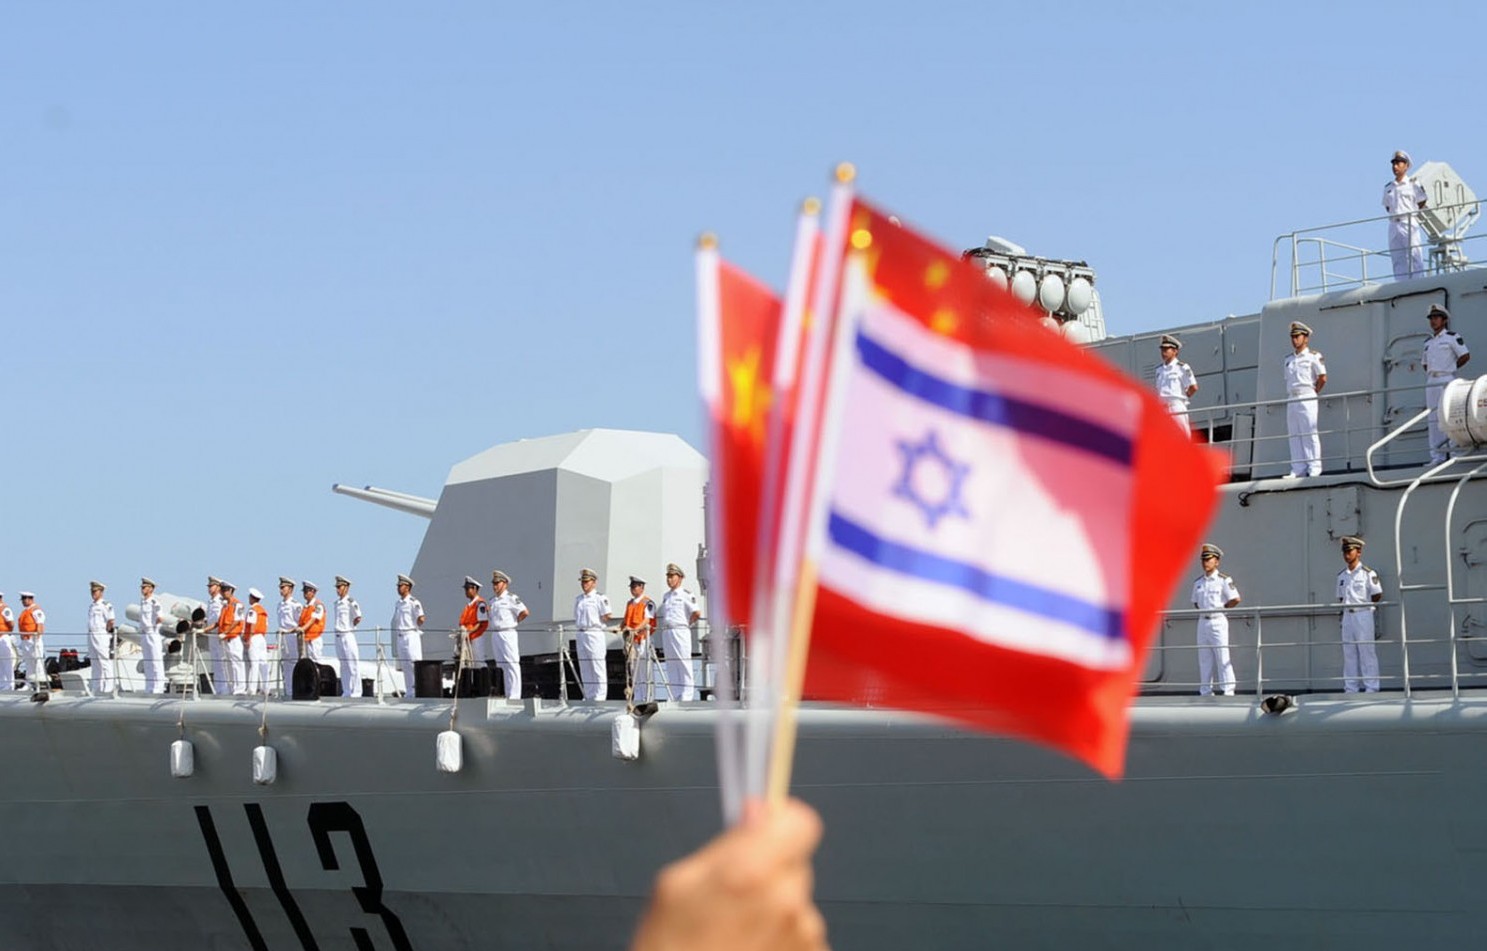 Israel and China flags